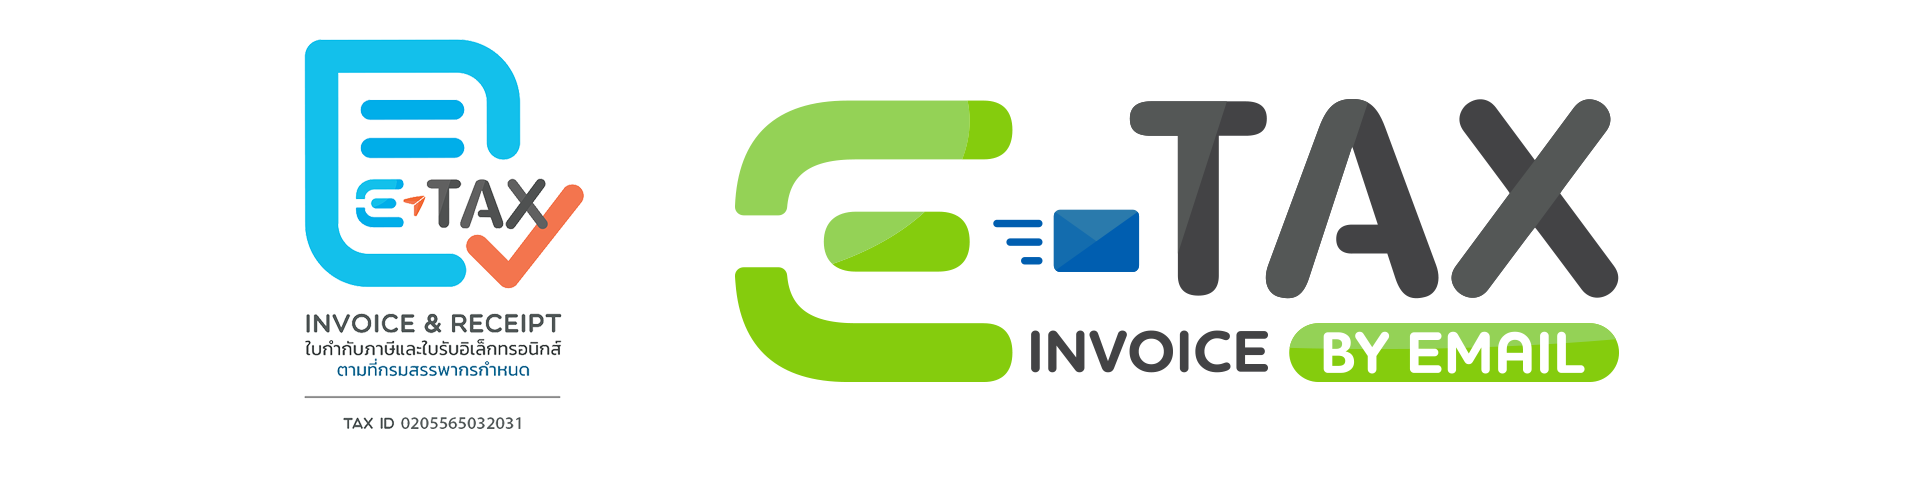 e-Tax Invoice